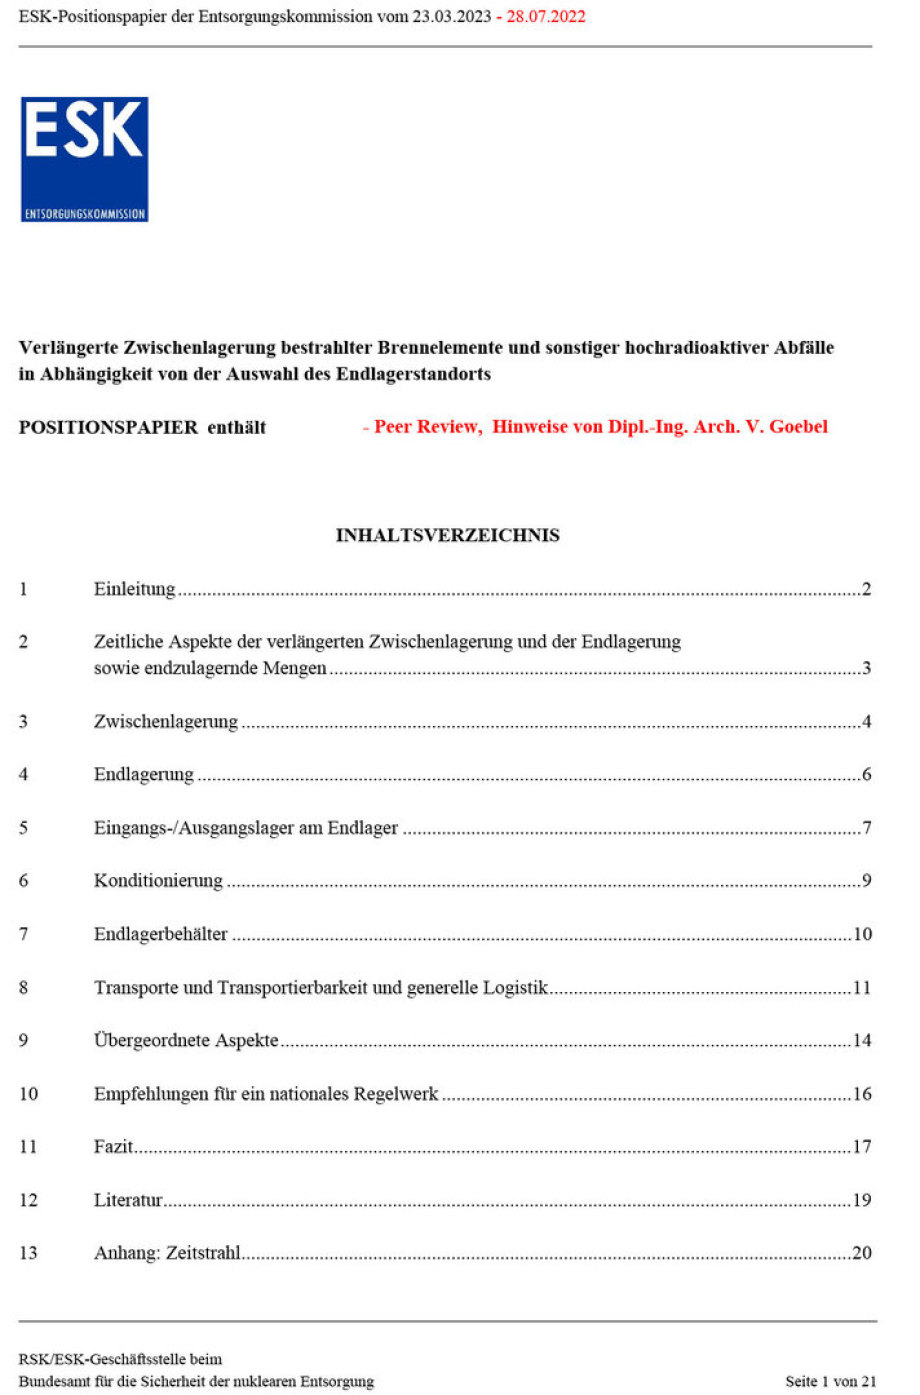 Endlager DBHD - ESK Positions-Papier - Peer Review von Dipl.-Ing. Arch. Volker Goebel